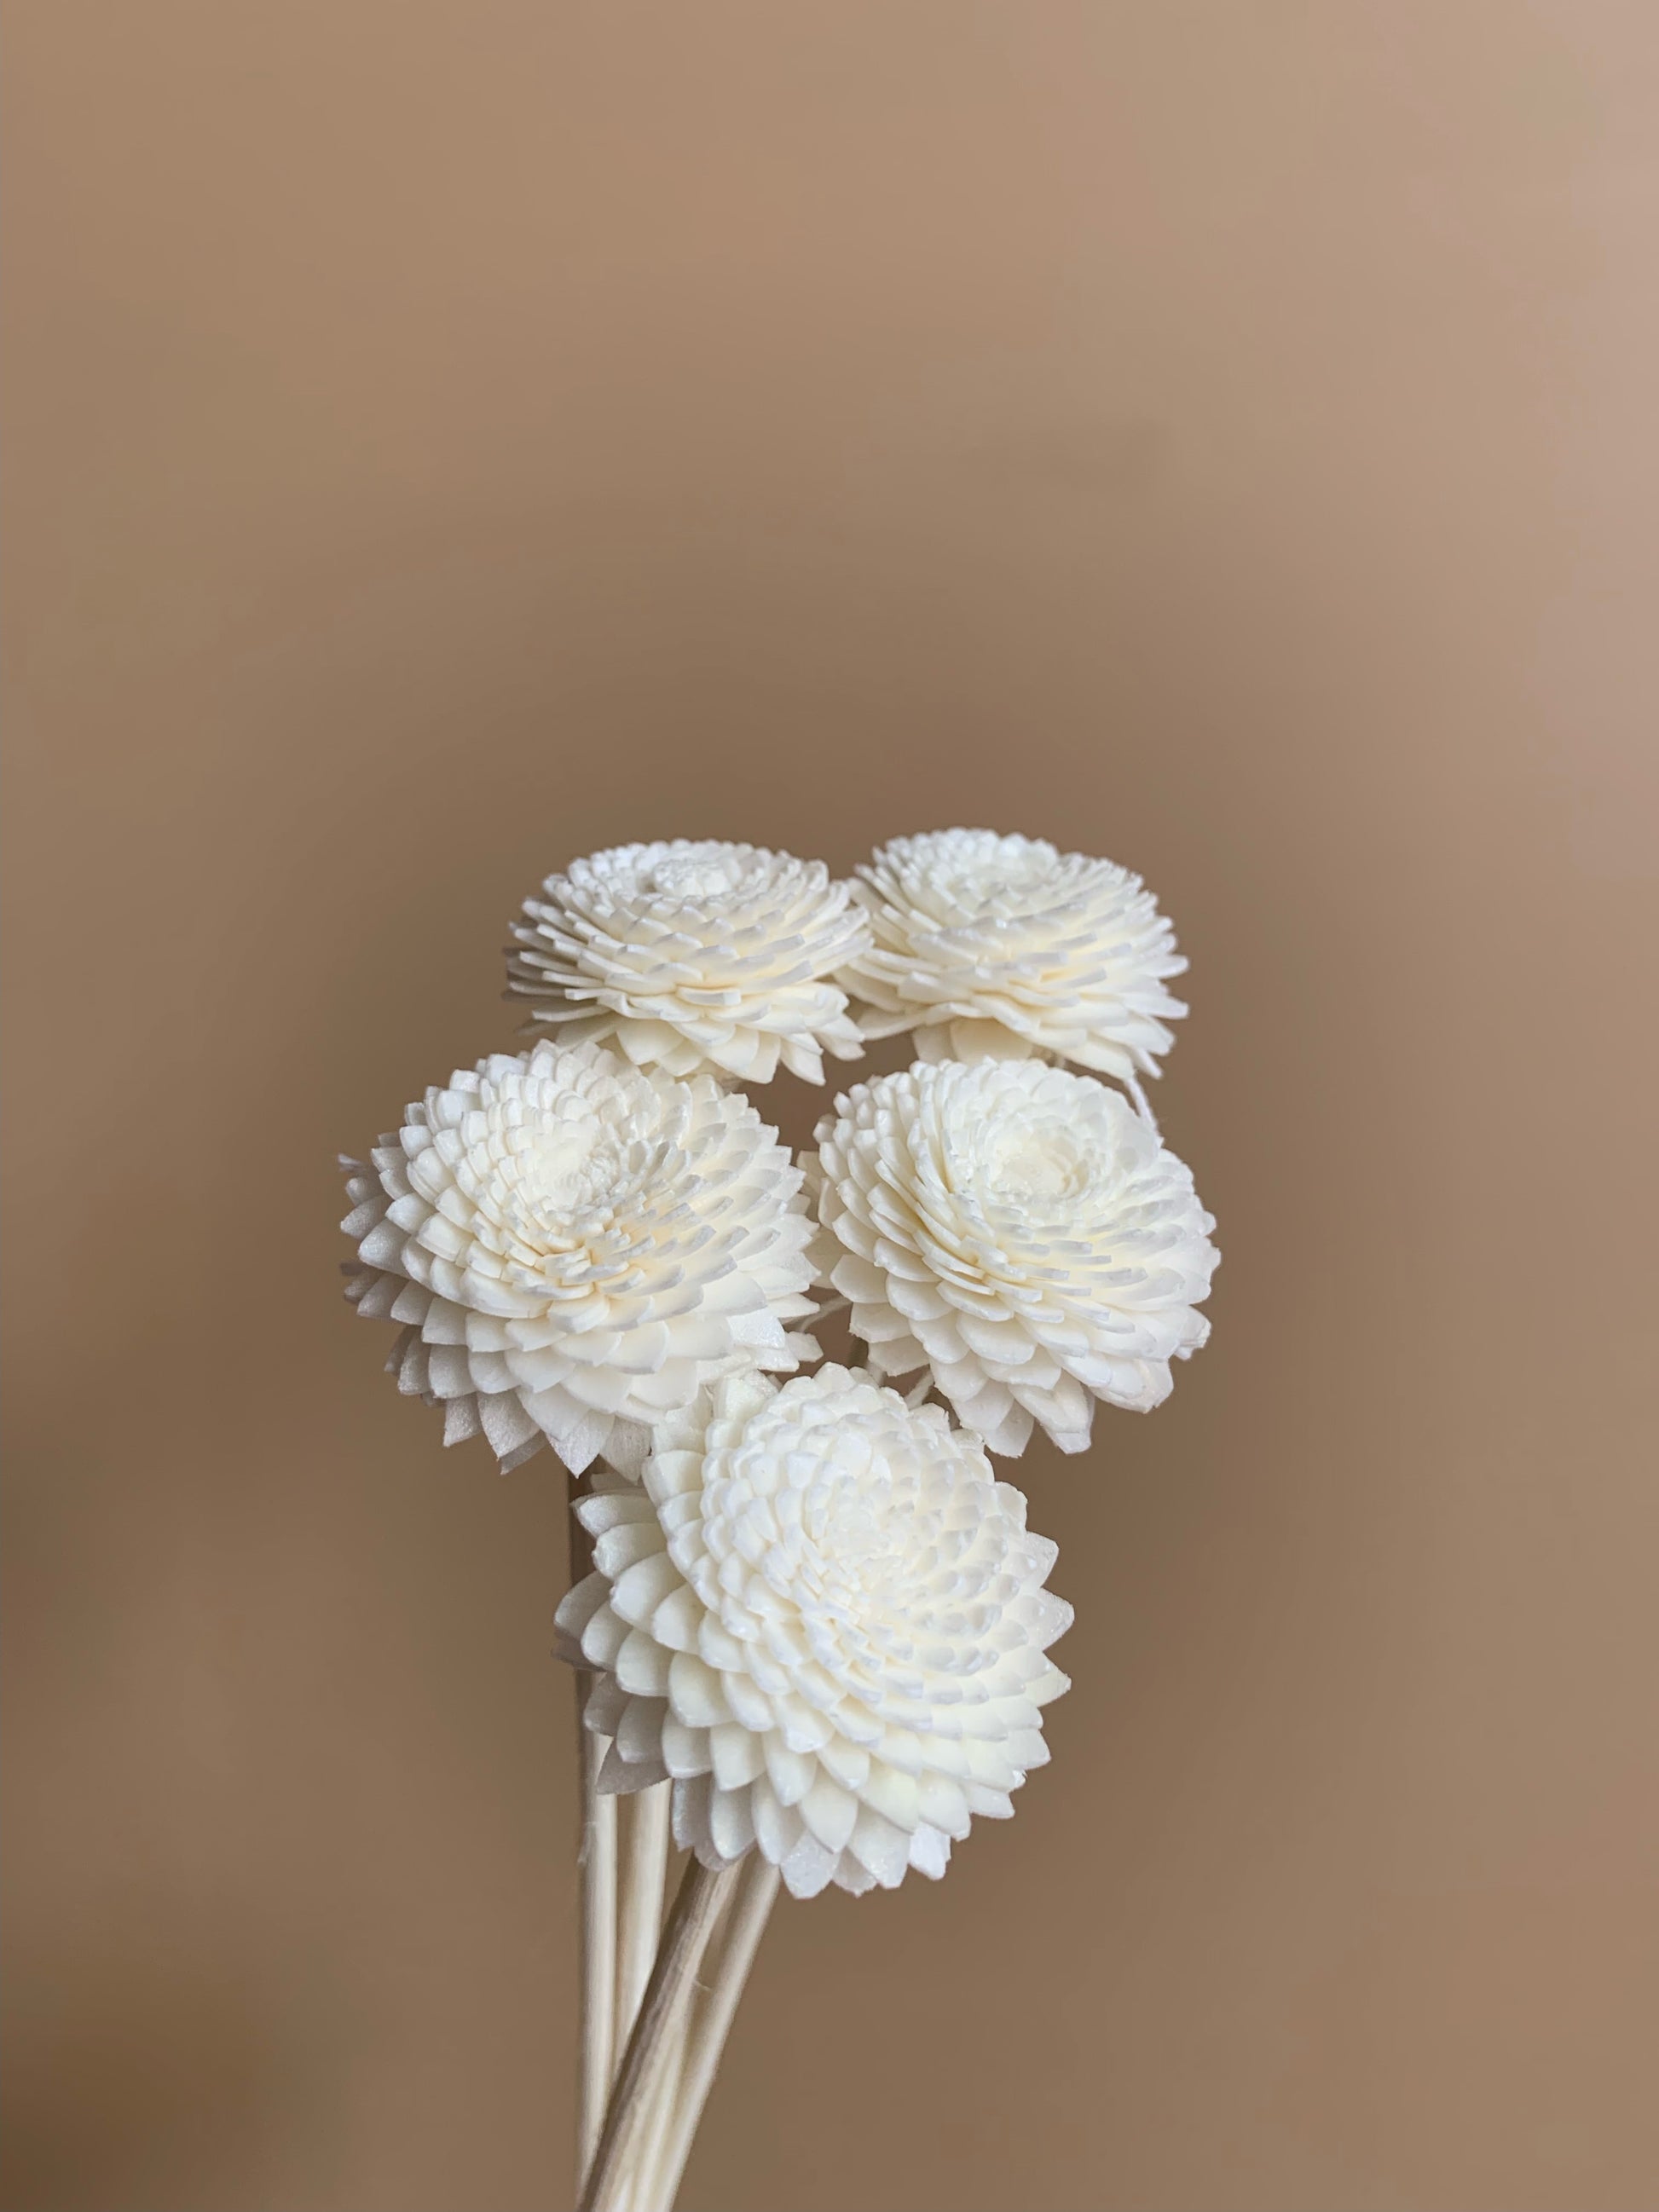 bunch of 5 white chrysanthemums